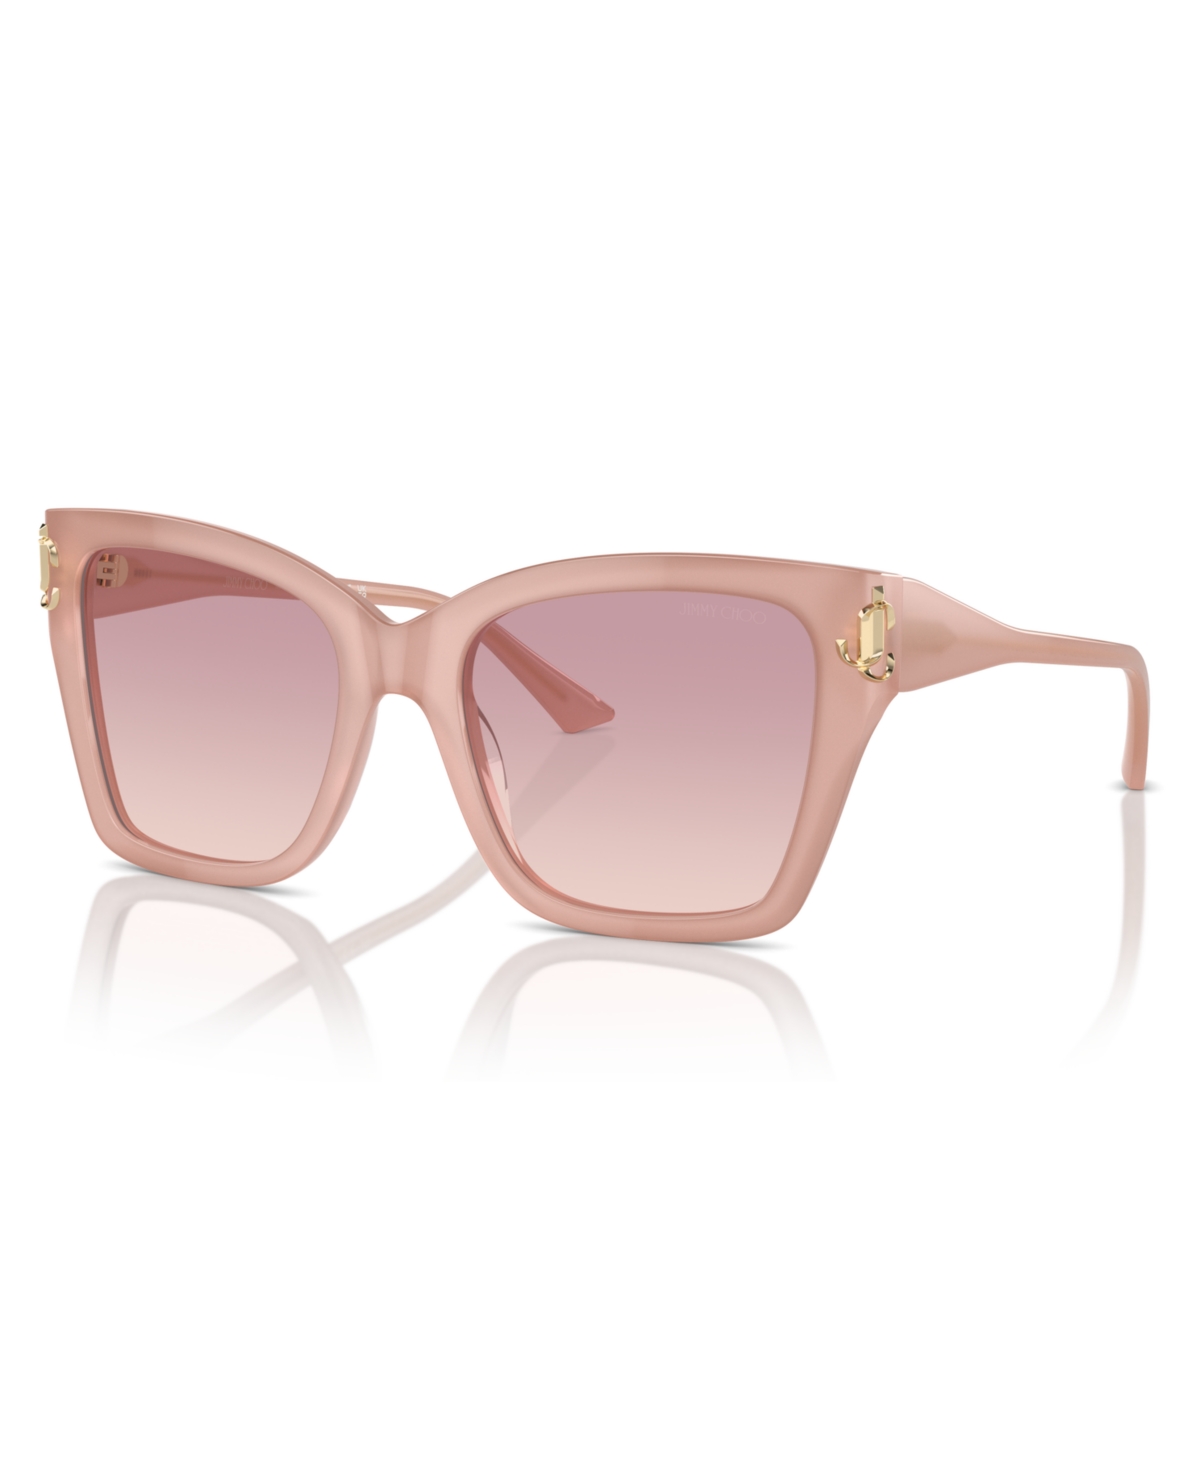 Women's Sunglasses, JC5017 - Opal Pink